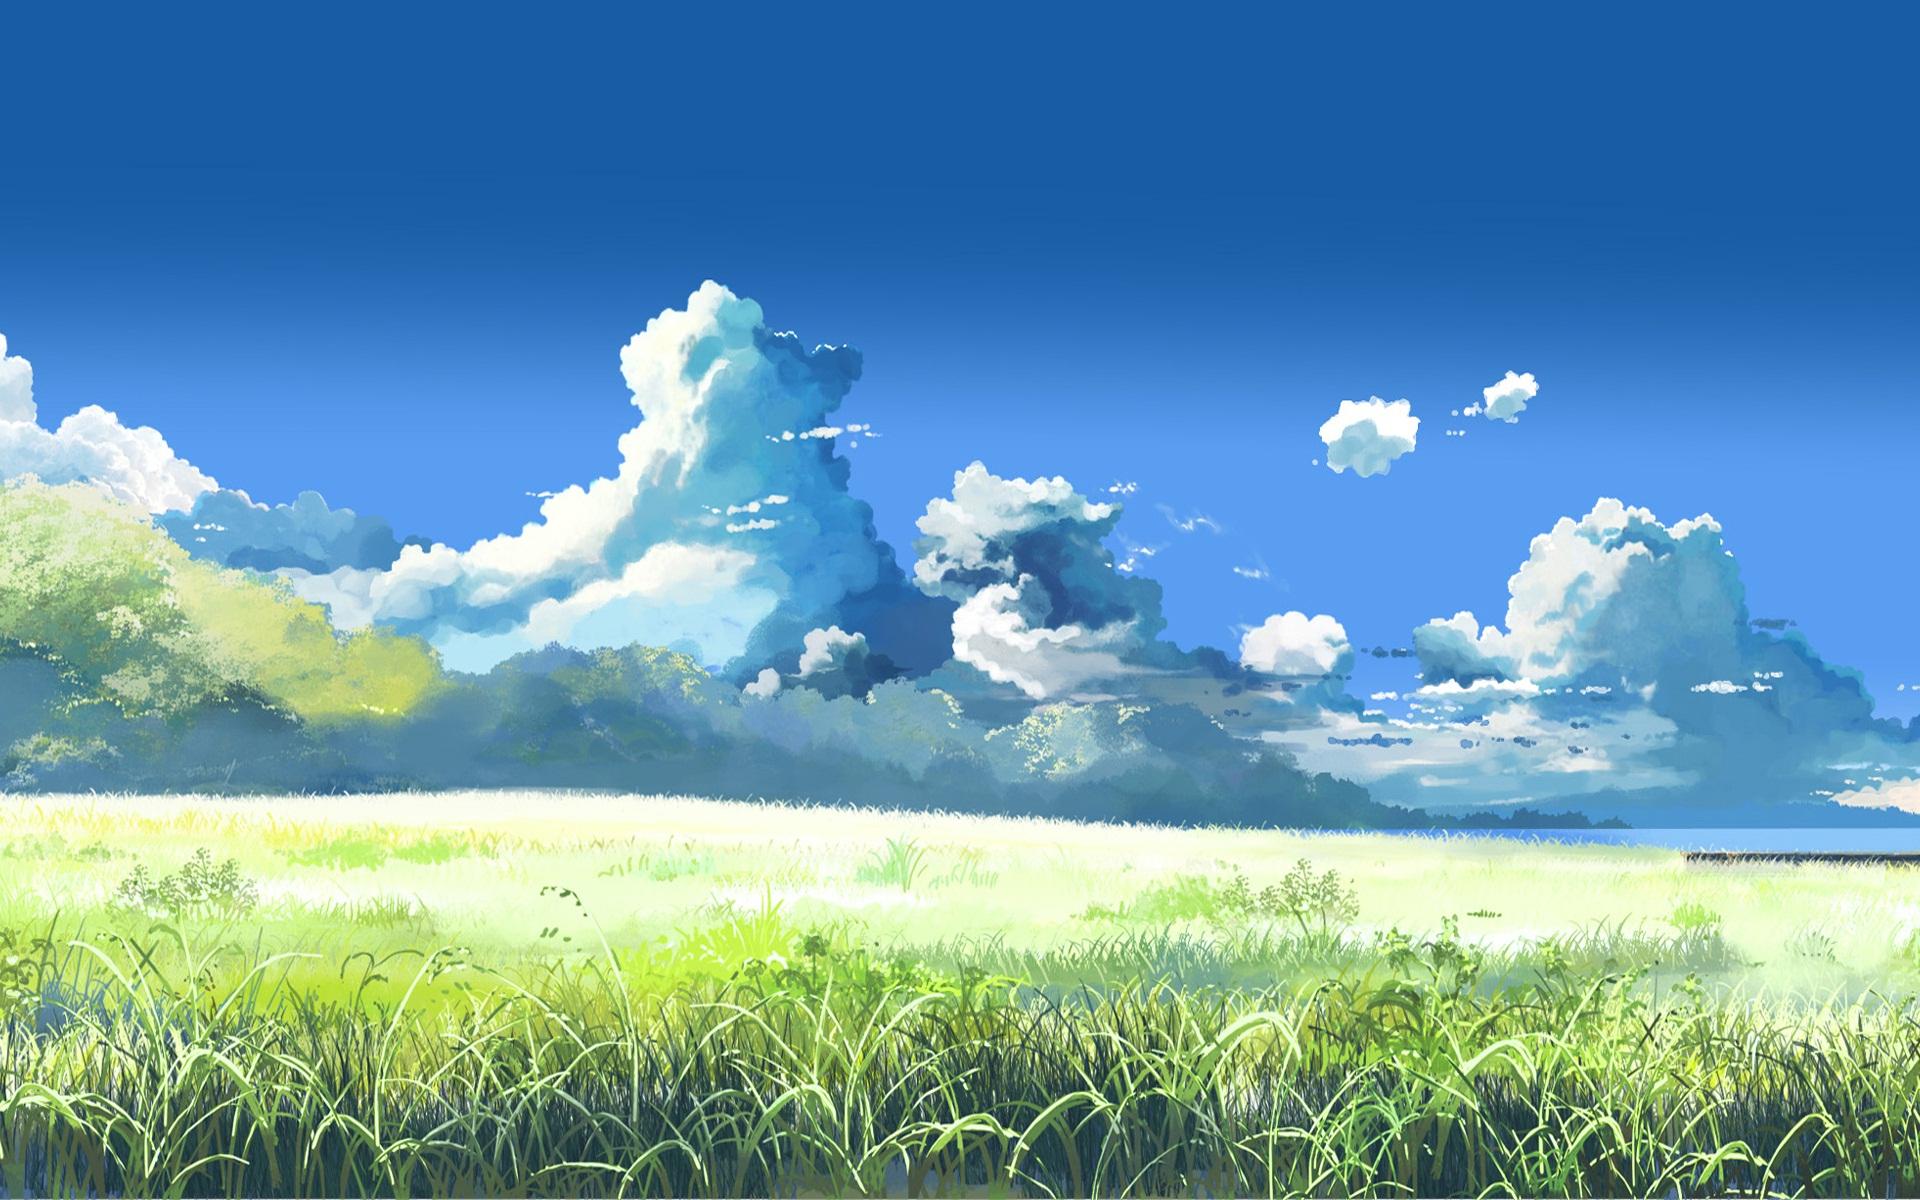 Aesthetic Anime Scenery Wallpapers